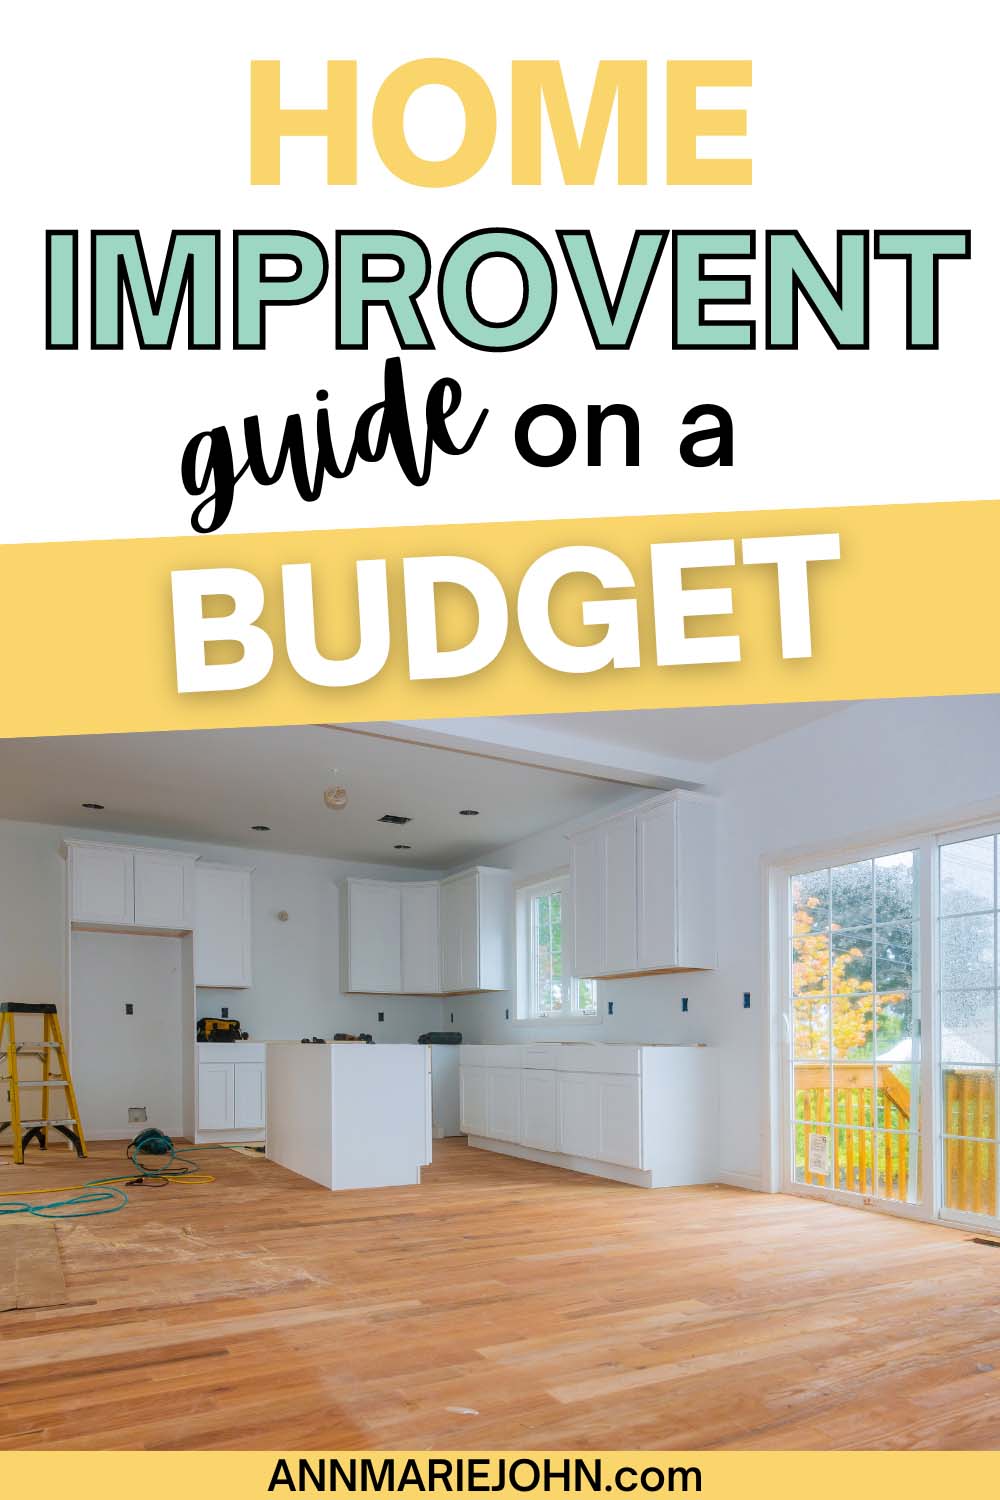 Home Improvement on a Budget